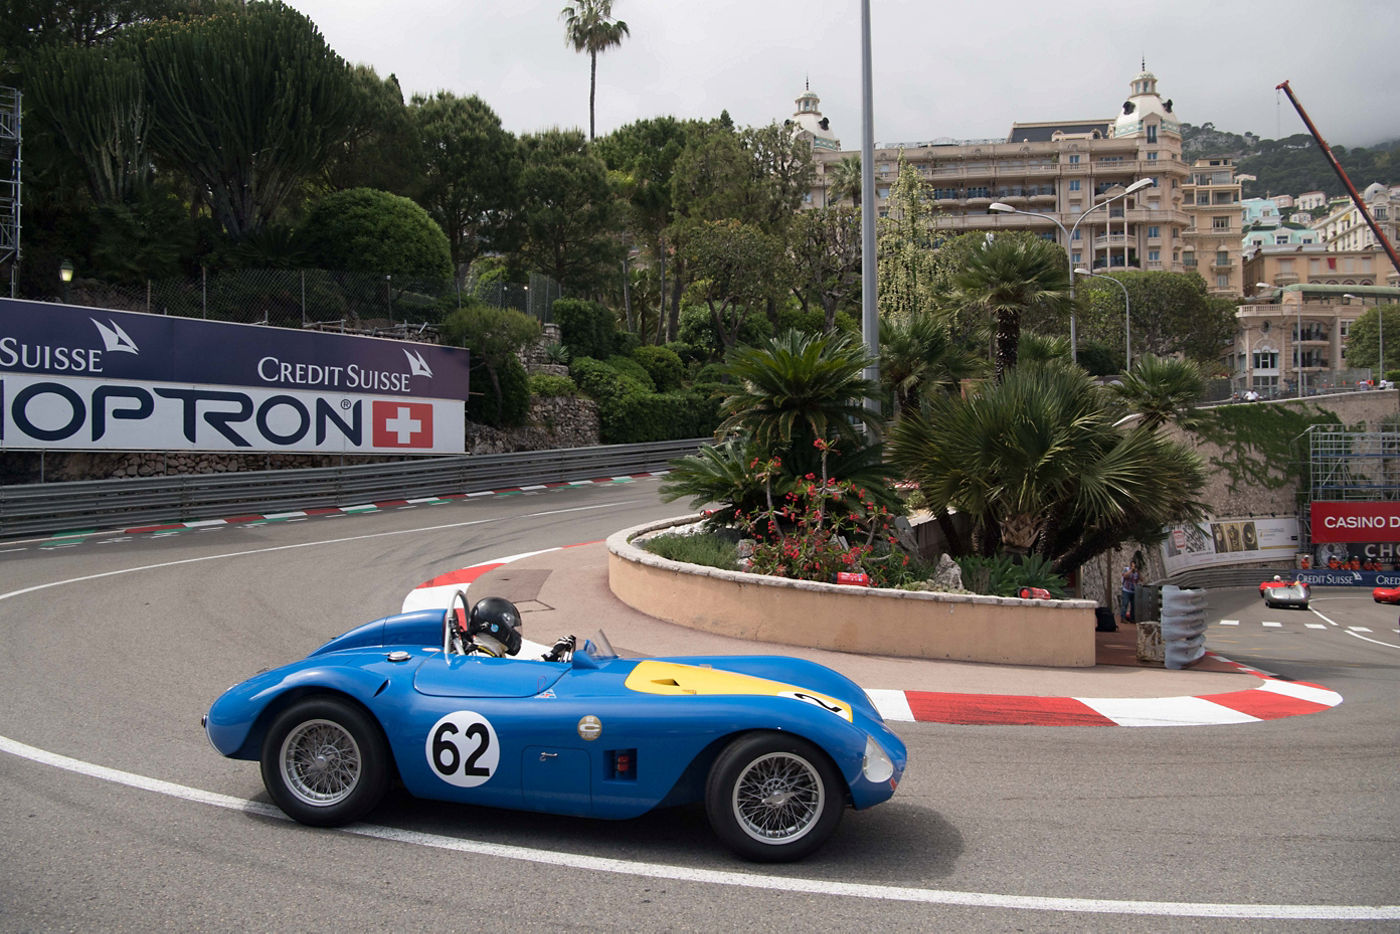 Grand Prix de Monaco Historique 2018 - Maserati A6GCS